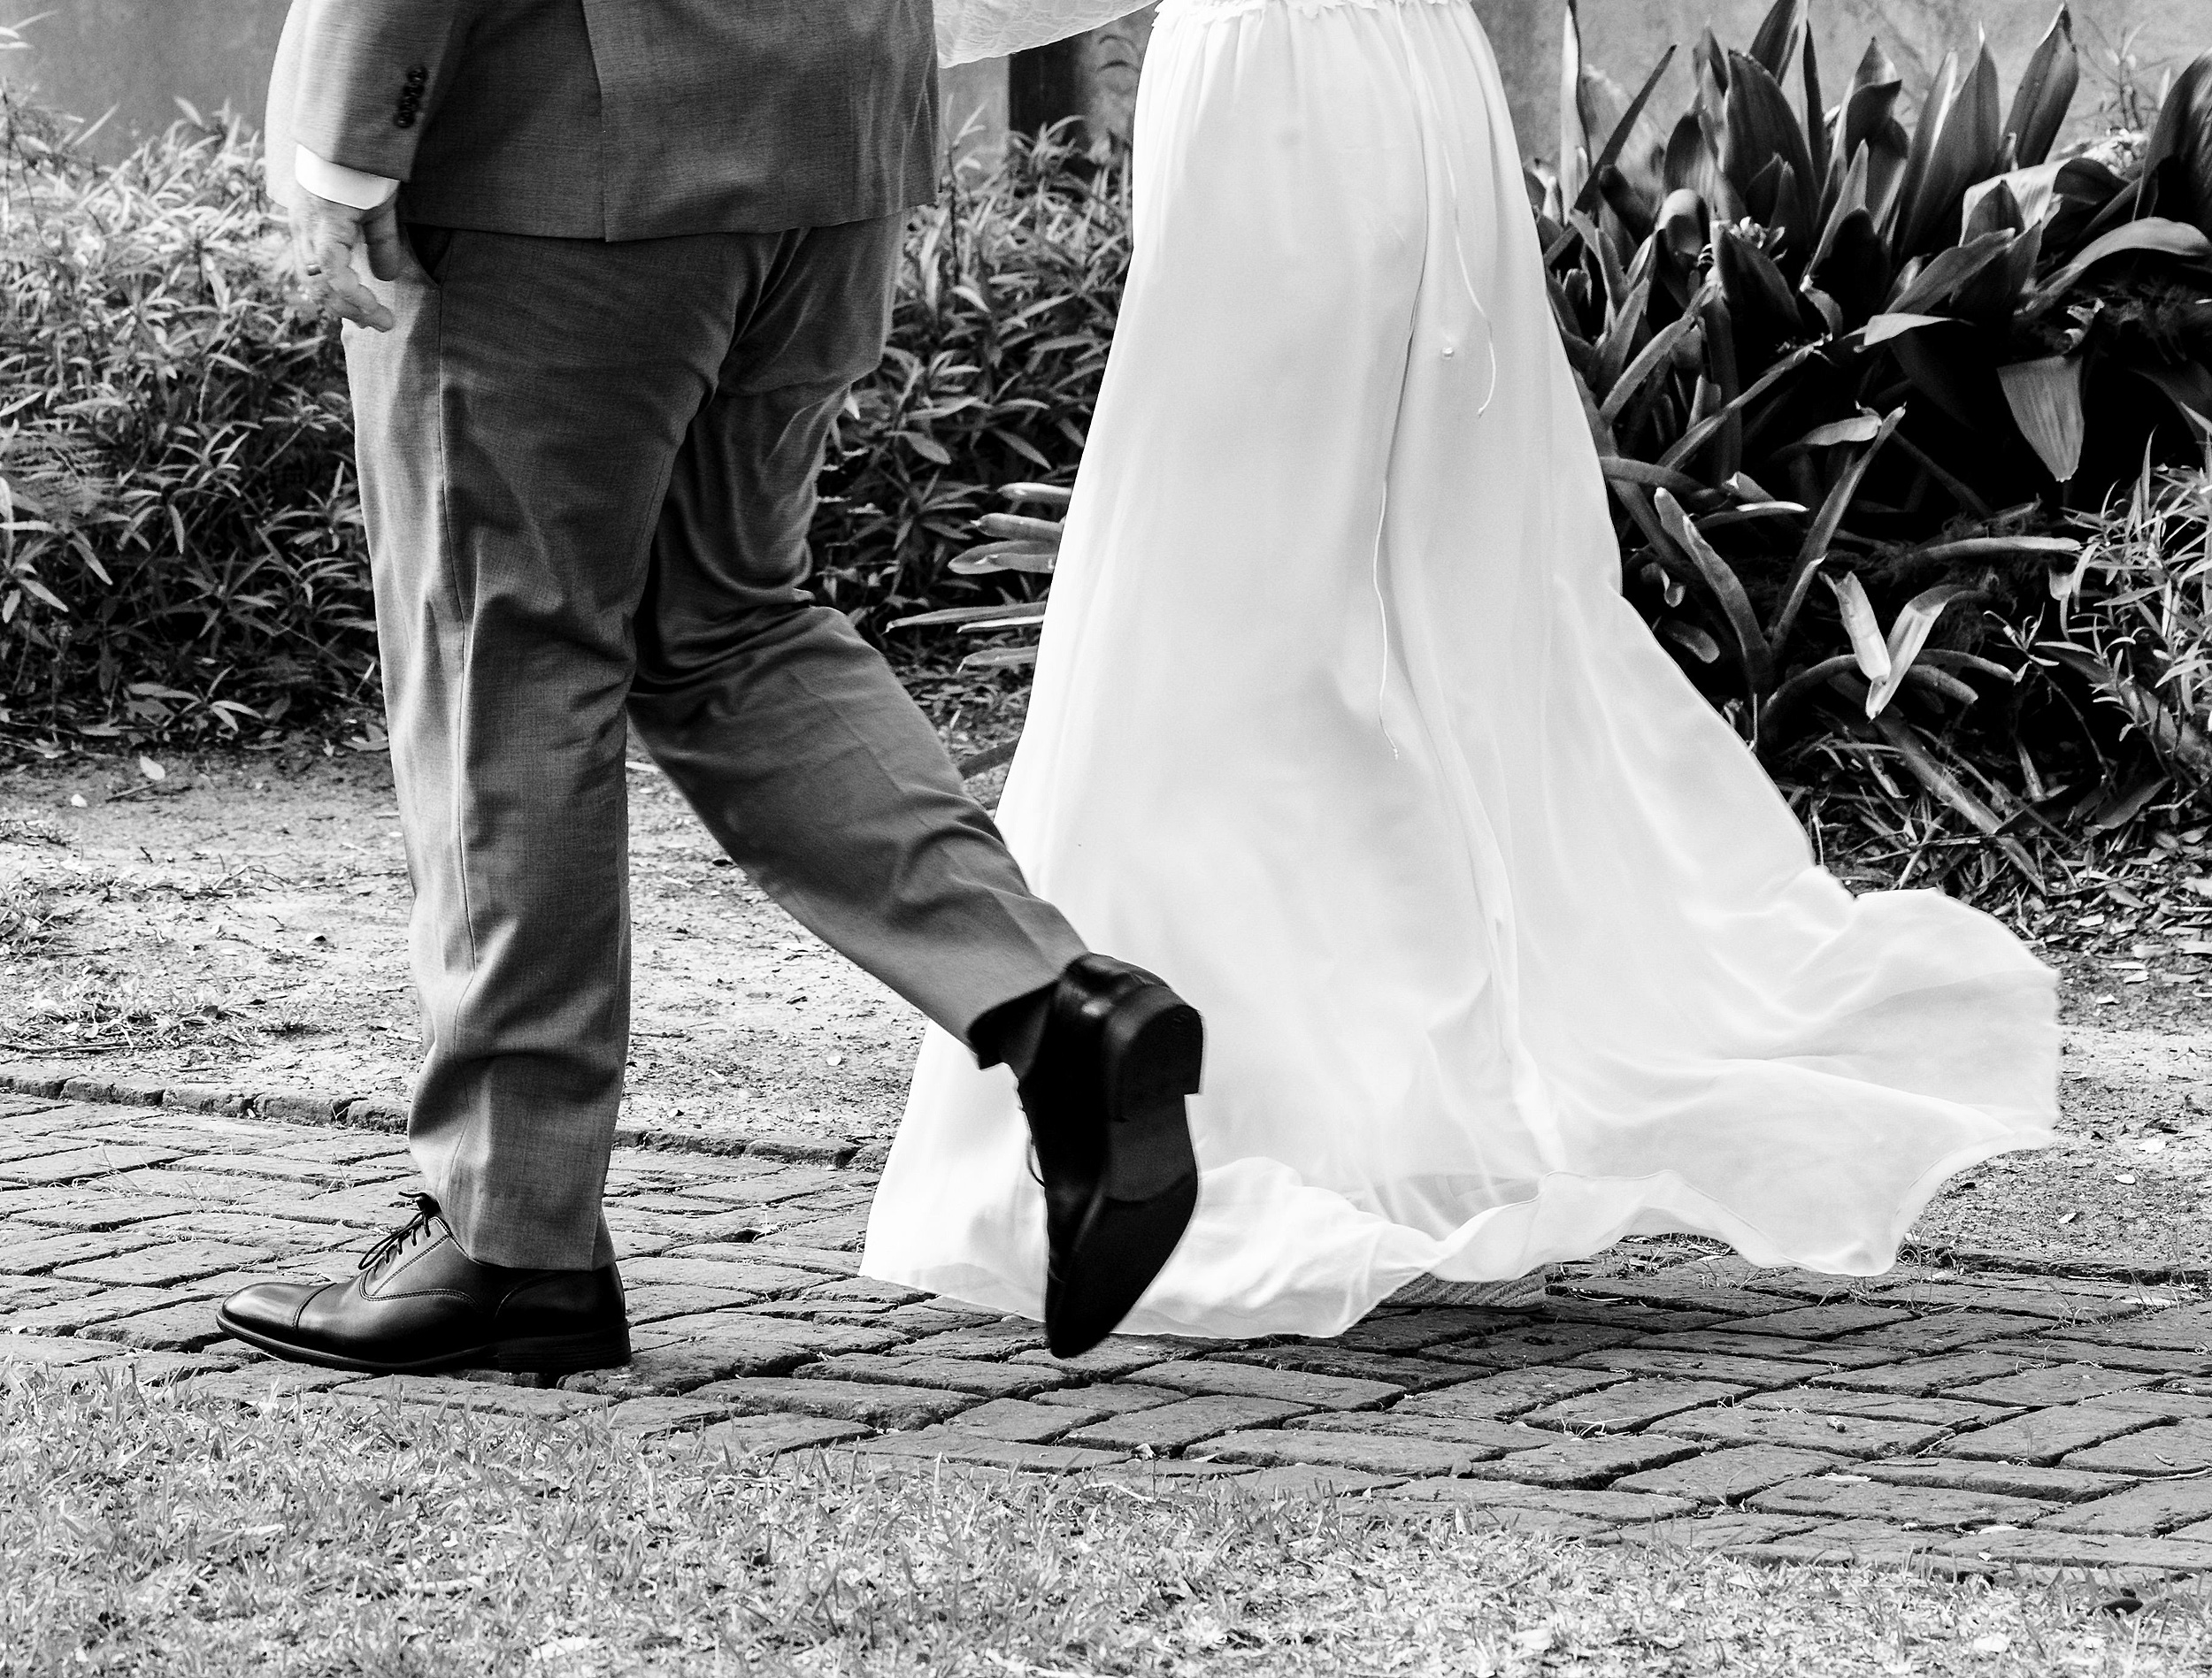 Newlyweds walk on a garden path holding hands